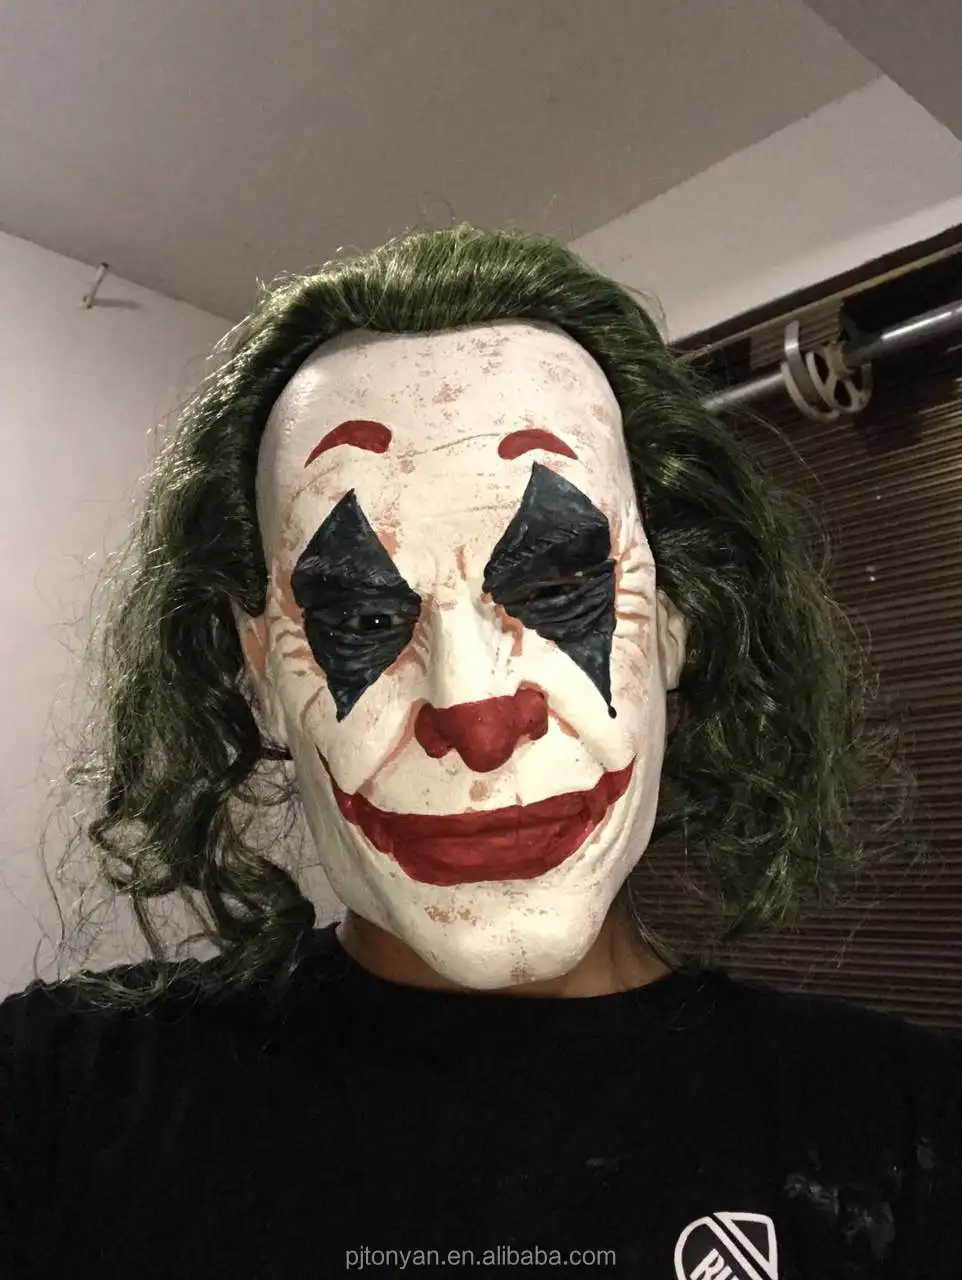 Halloween Creepy Mask Costume Latex Scary Dark Knight Clown Joker Mask Masquerade With Green And